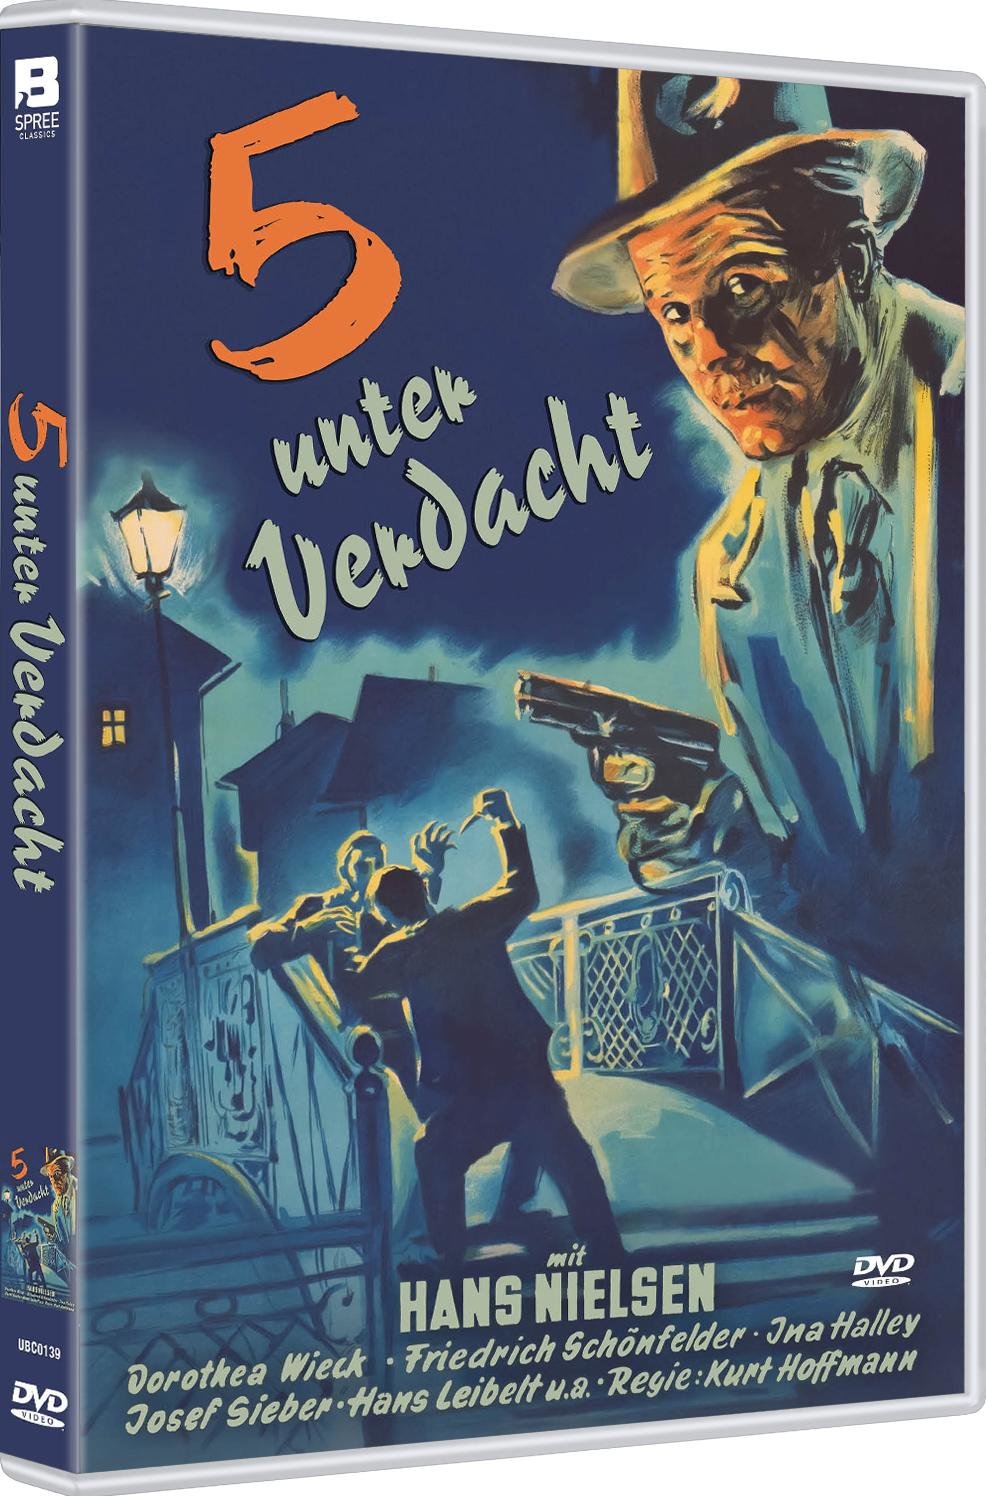 5 unter Verdacht - Original Kinofassung (digital remastered)  (DVD)